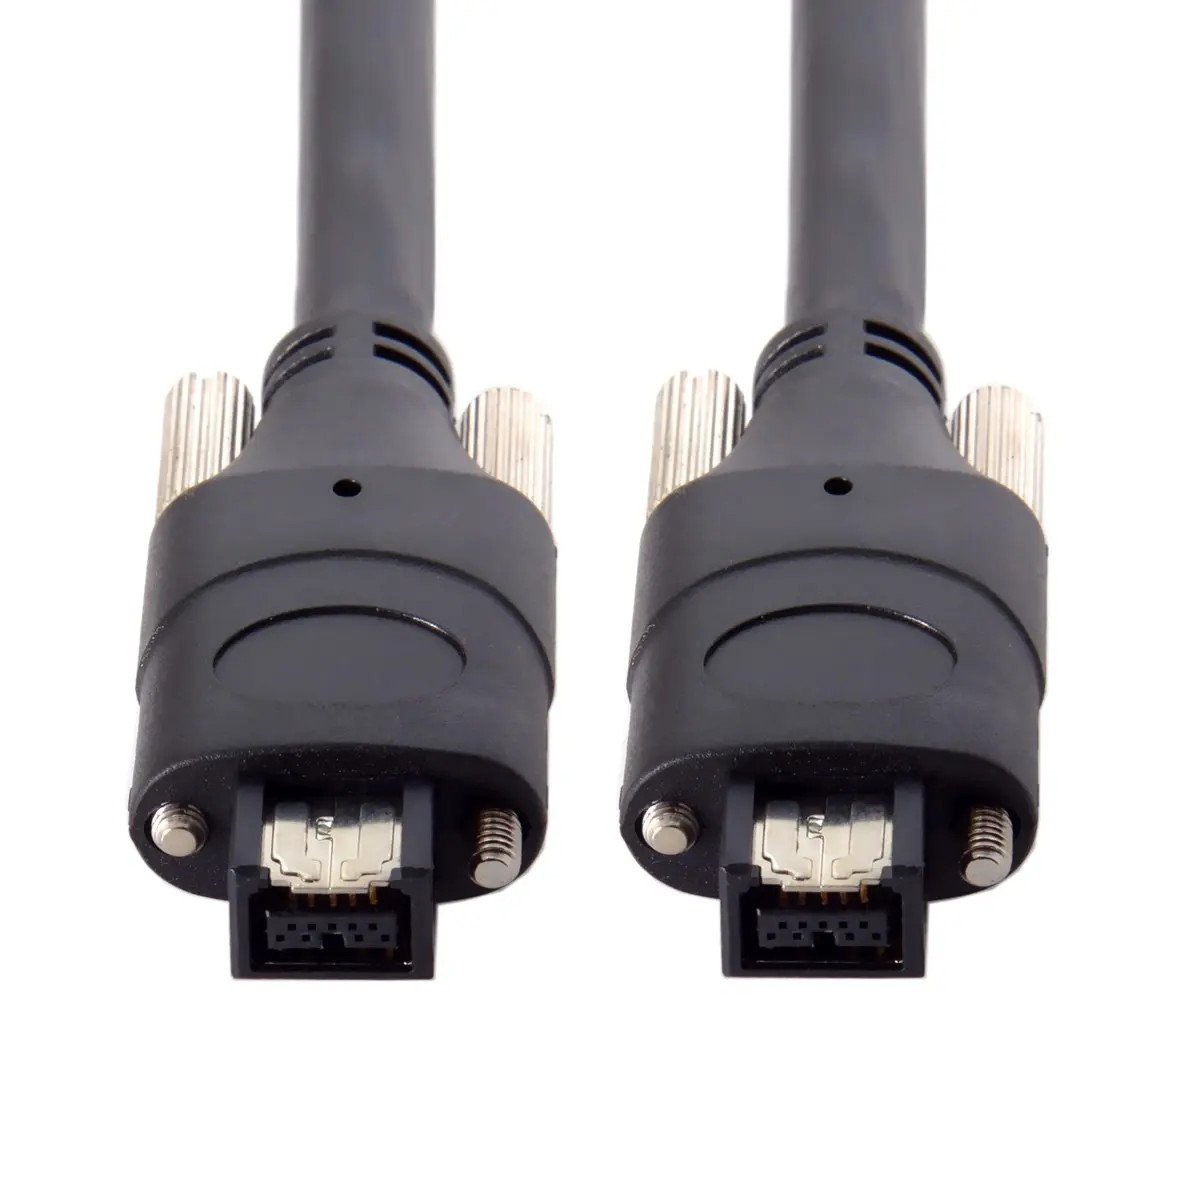 Chenyang ilink Firewire 800 IEEE1394 9Pin розетка для подключения к 9Pin винт для кабеля Тип крепление 1,0 м для Камера